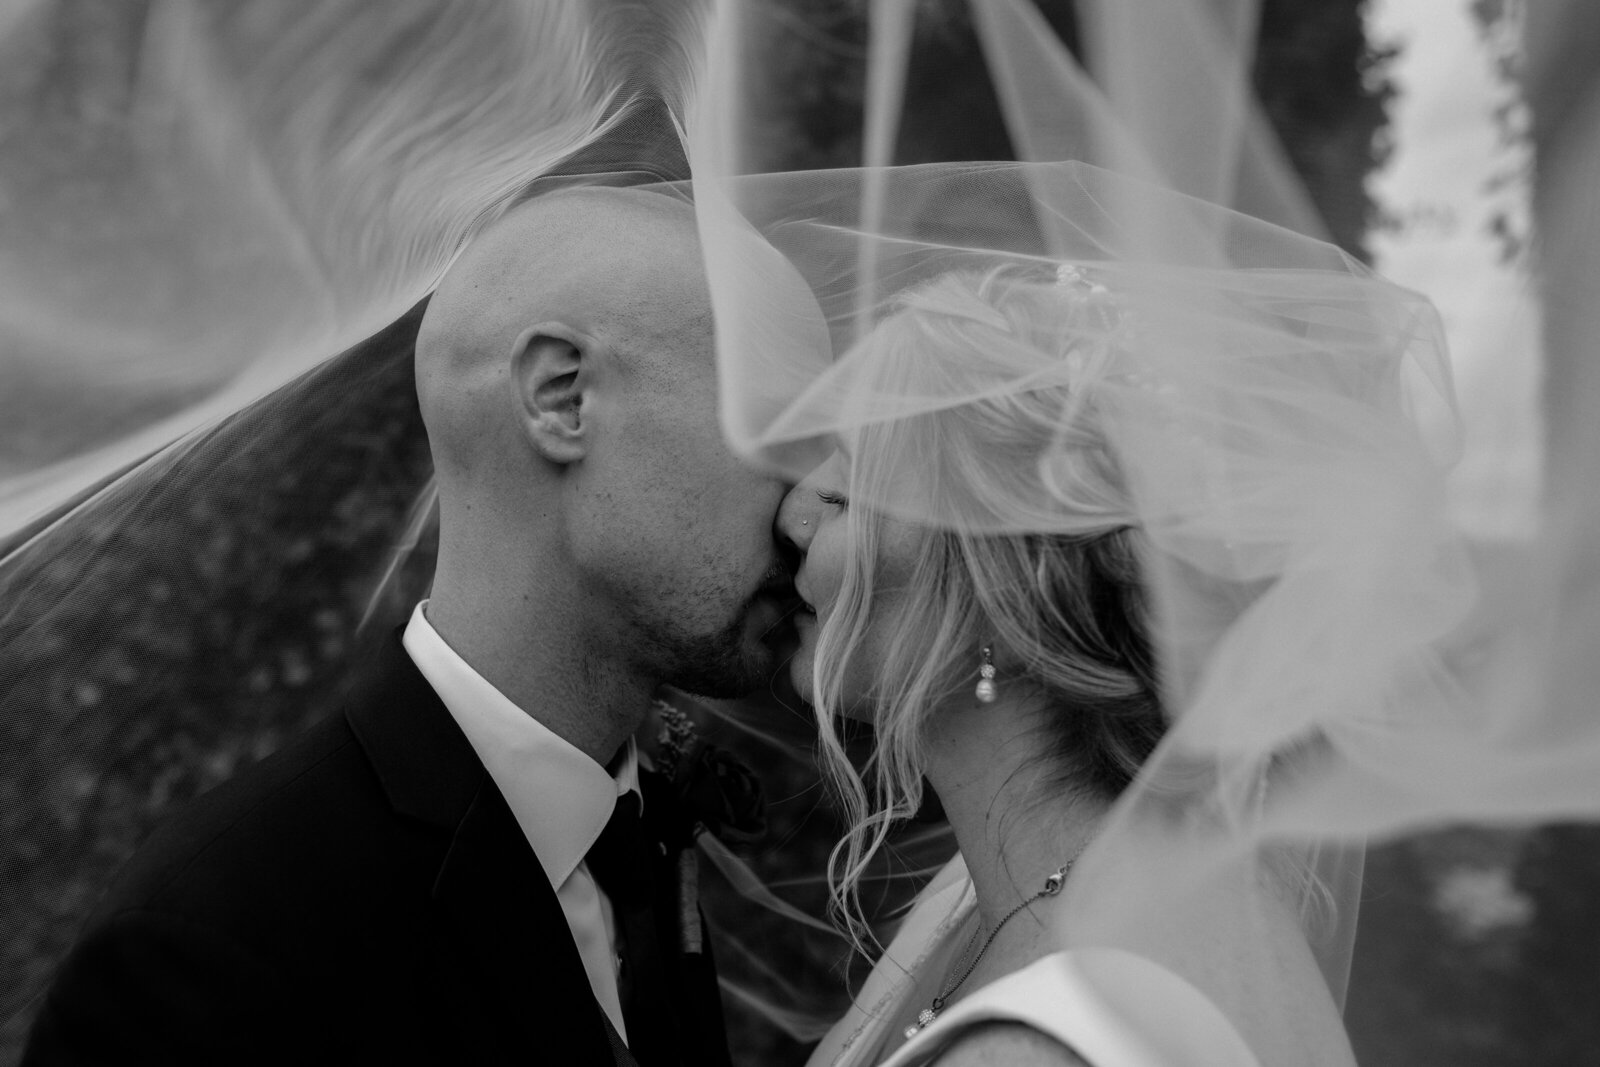 A bride and groom kiss under a windblown veil